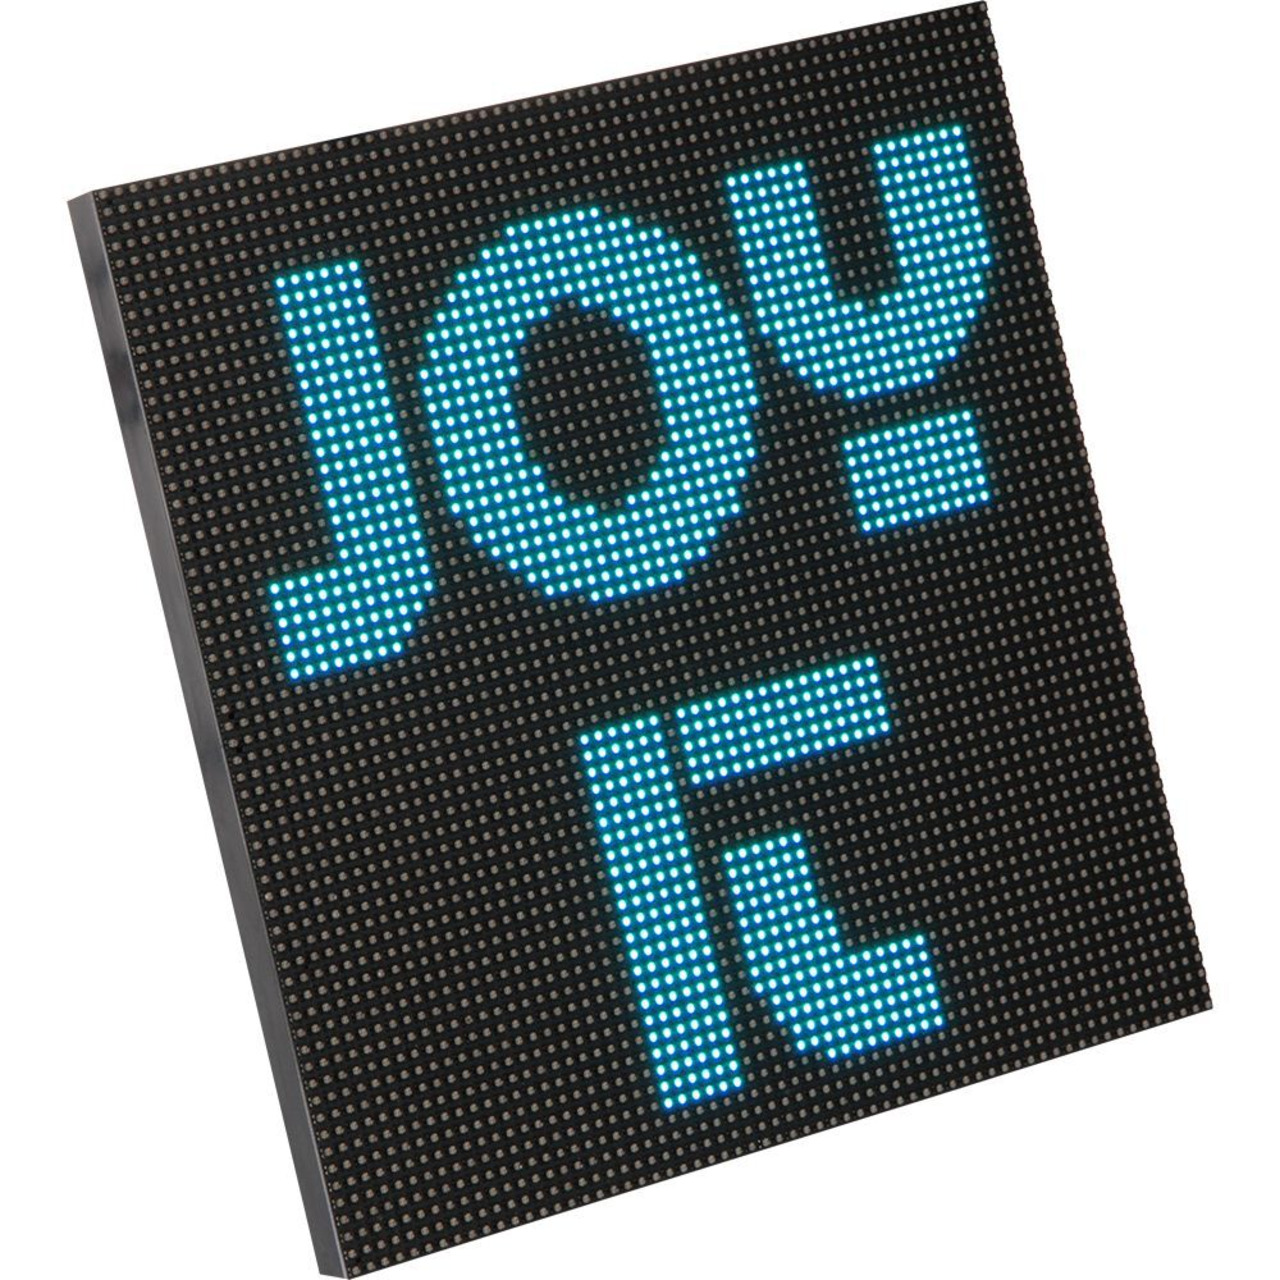 Joy-IT RGB-LED-Matrix-Modul 64x64 für Raspberry Pi- Arduino- Banana Pi- mirco:bit